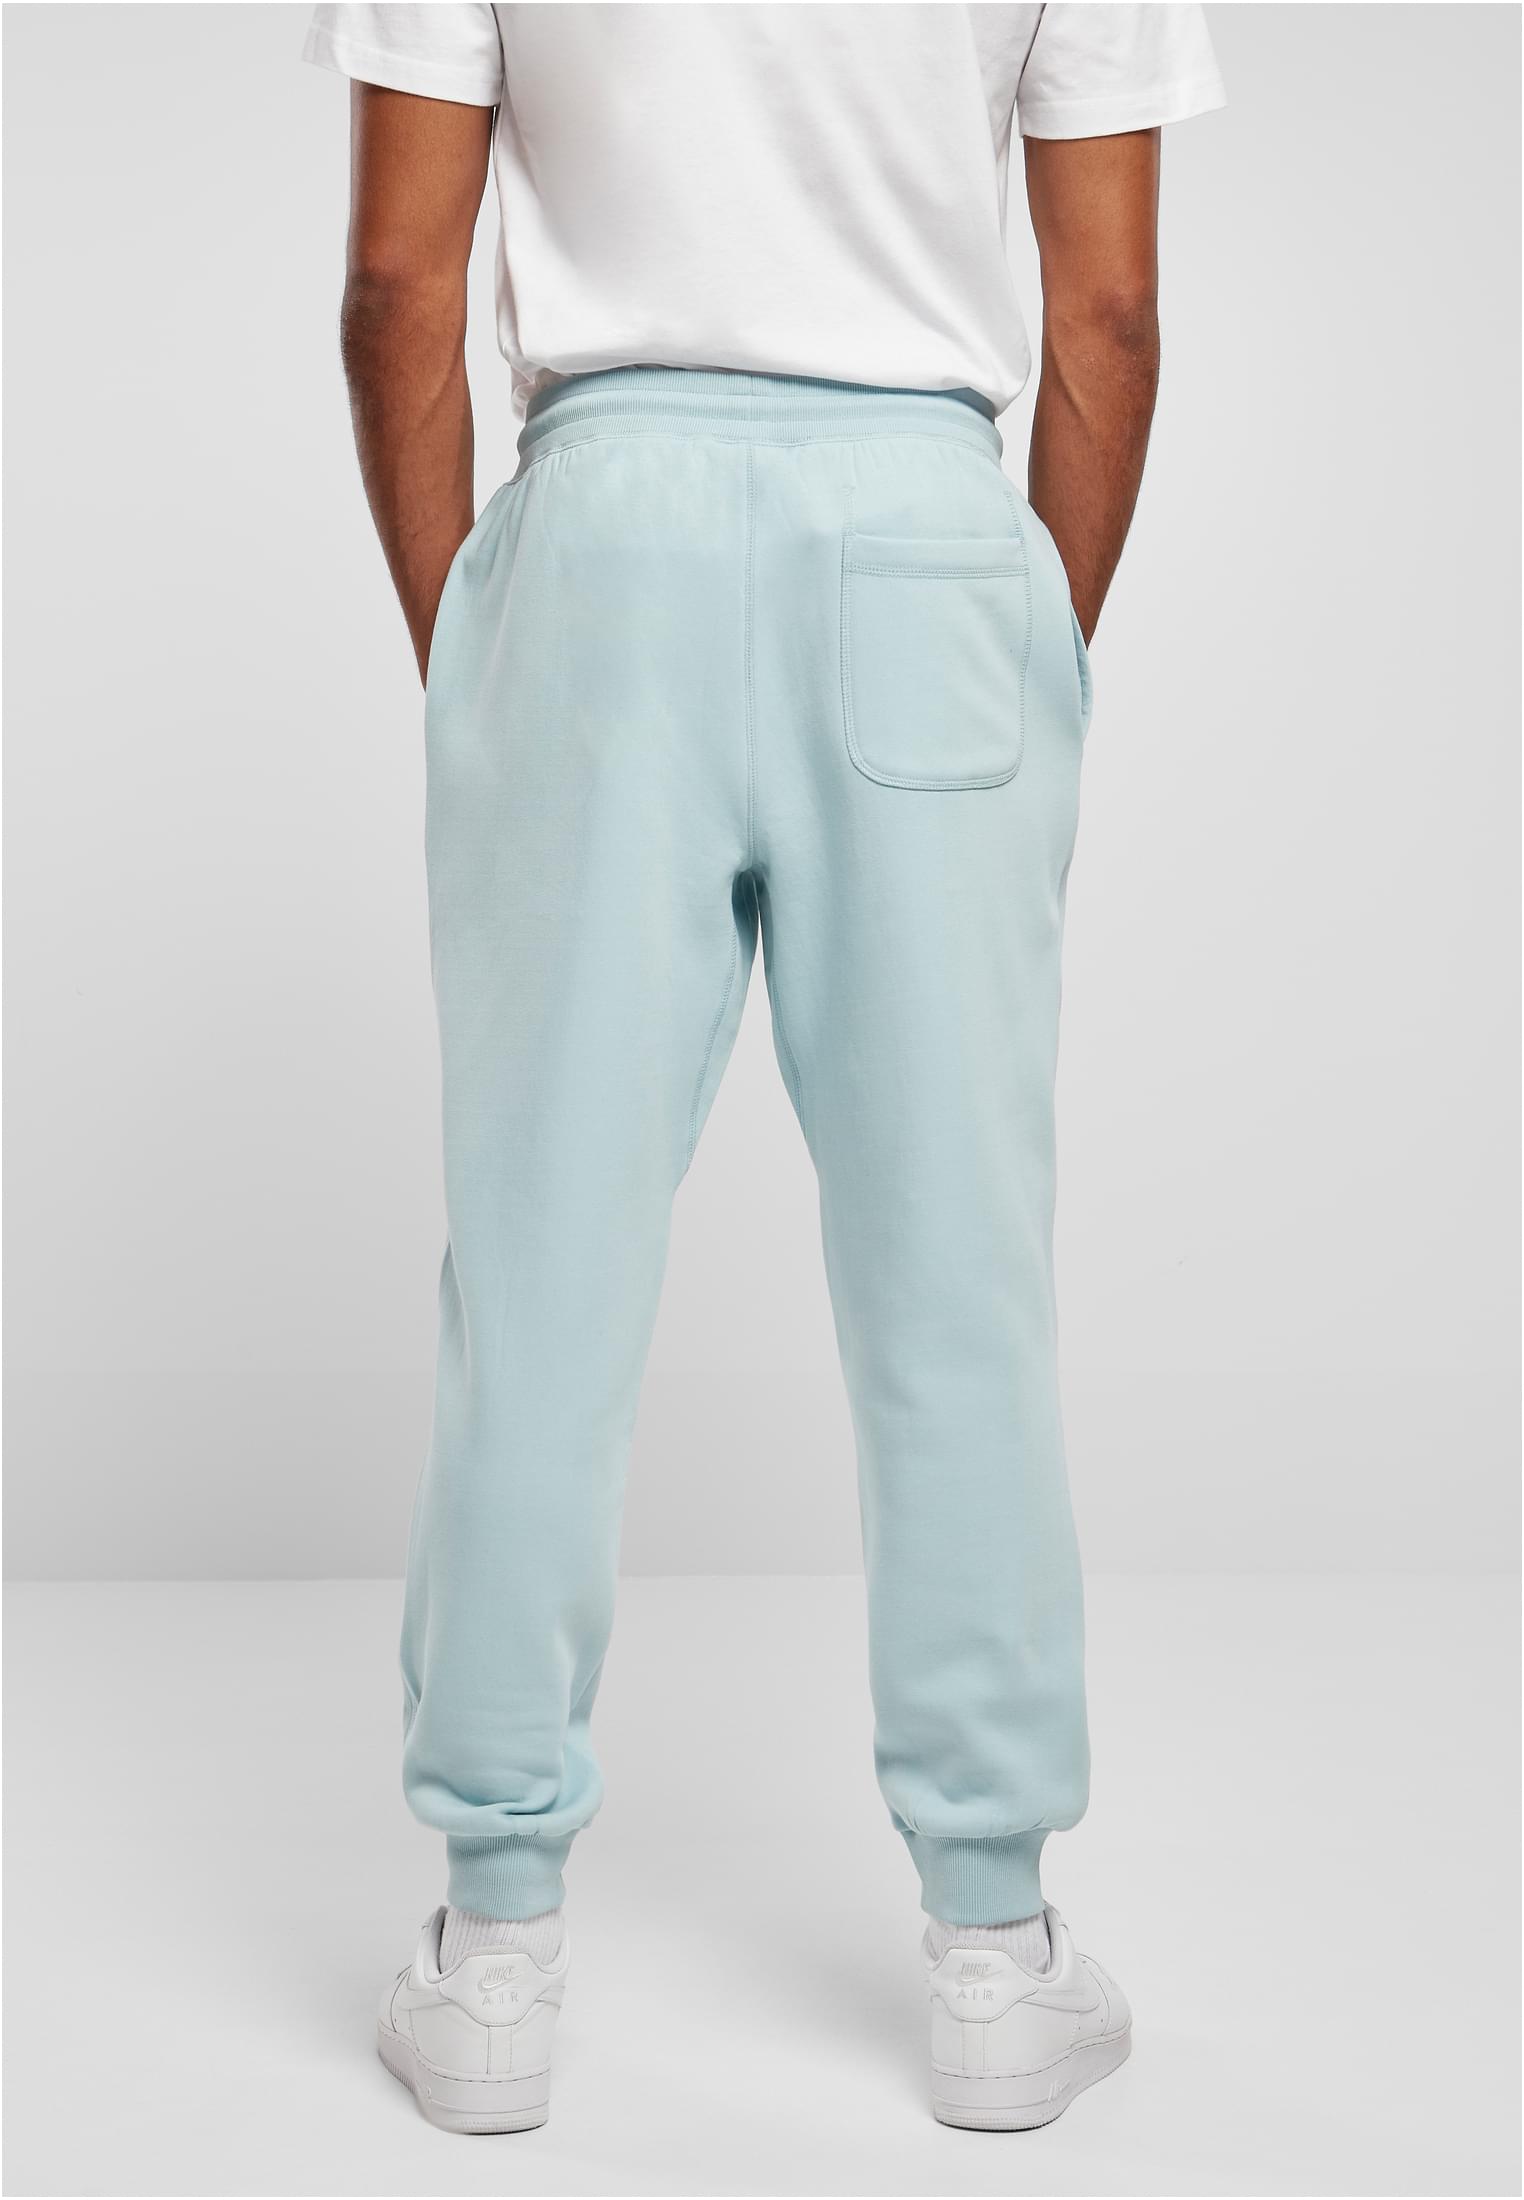 Herren Basic Sweatpants in Farbe ocean blue